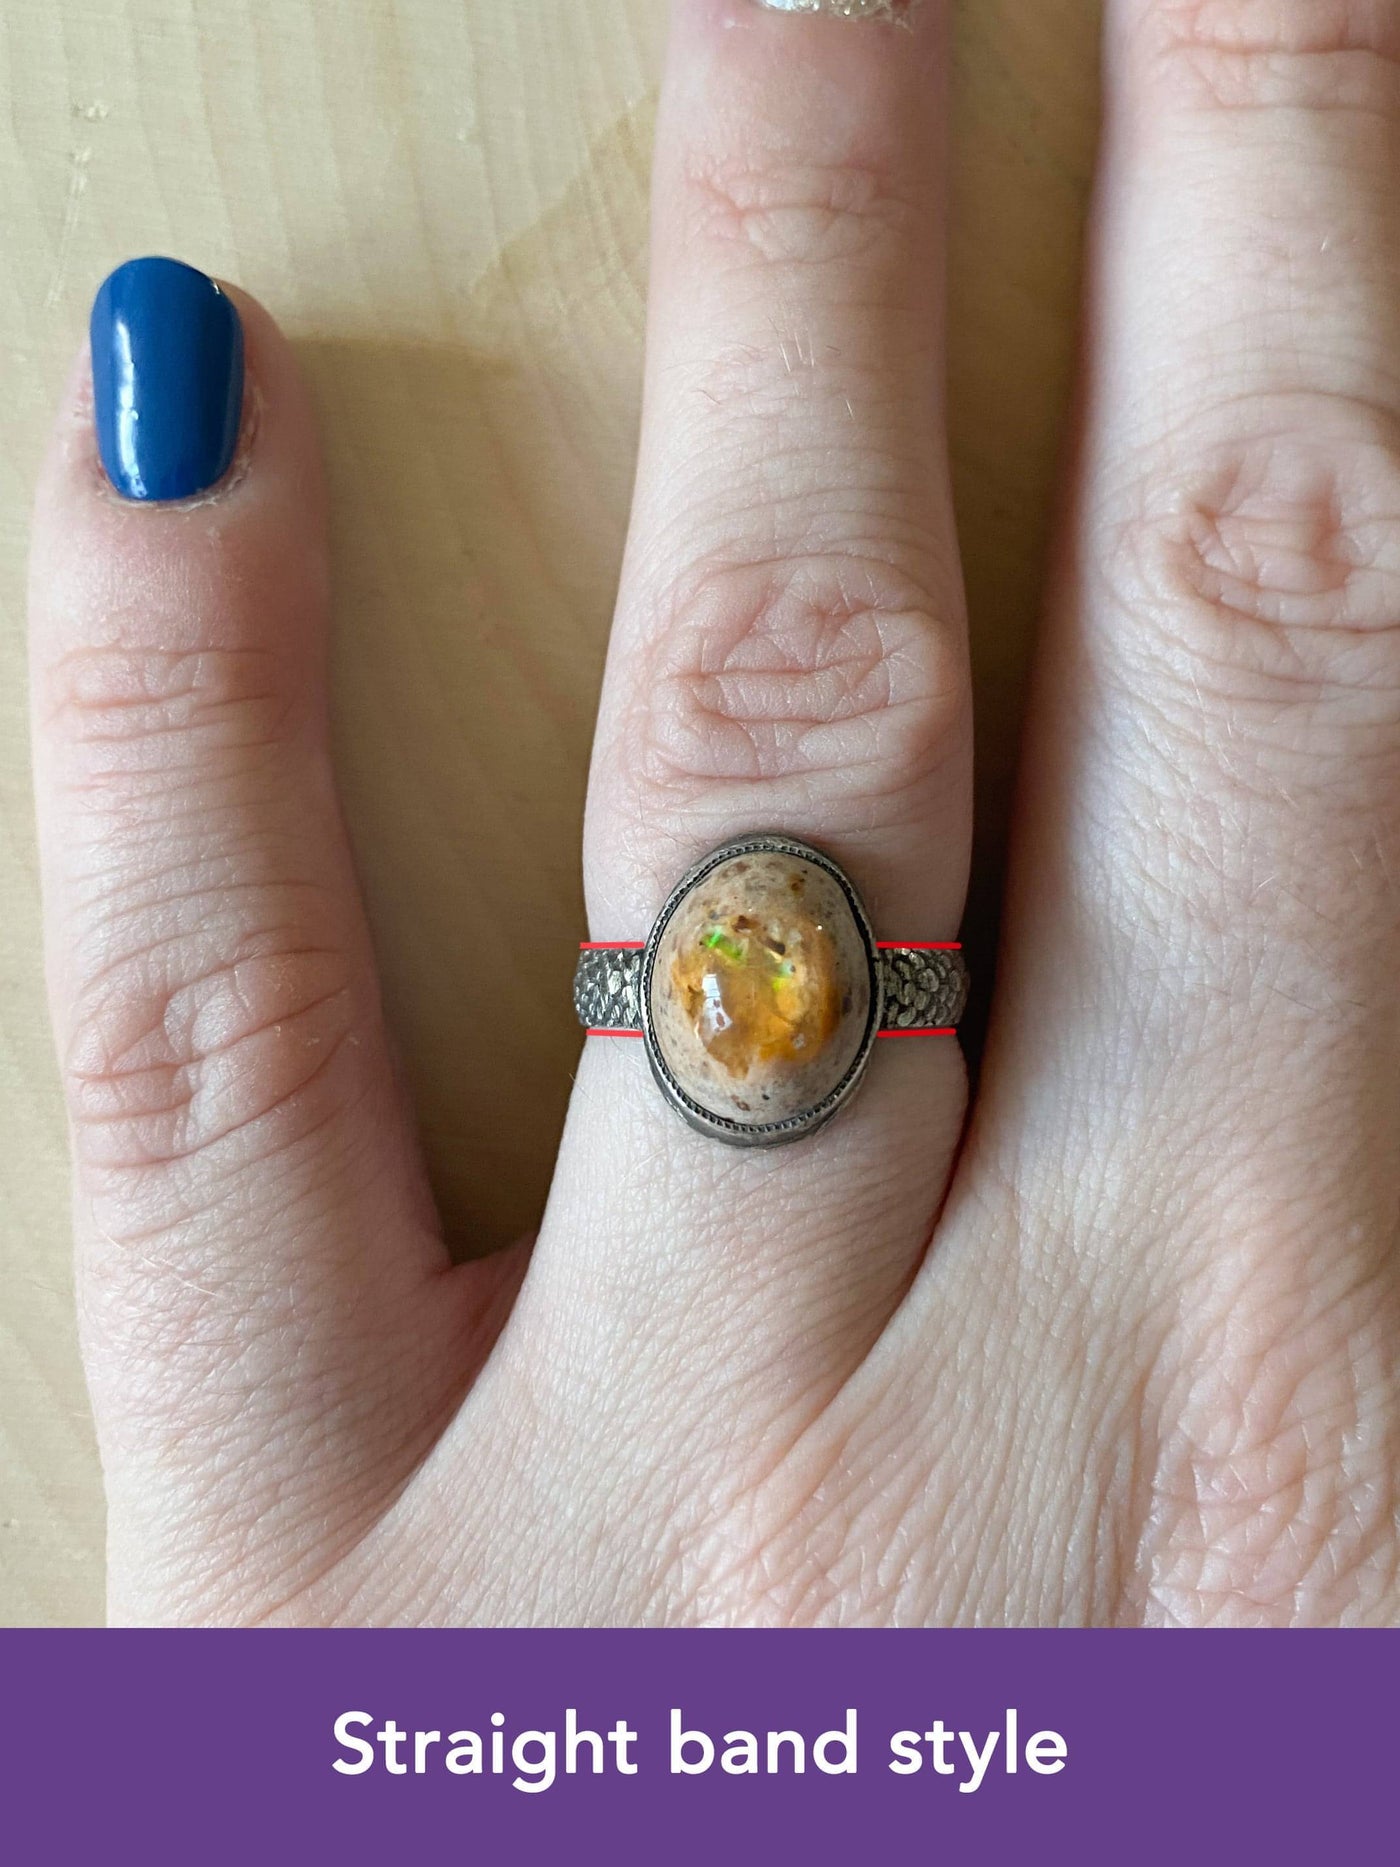 Incantus, Magic Dragon Egg Opal Ring